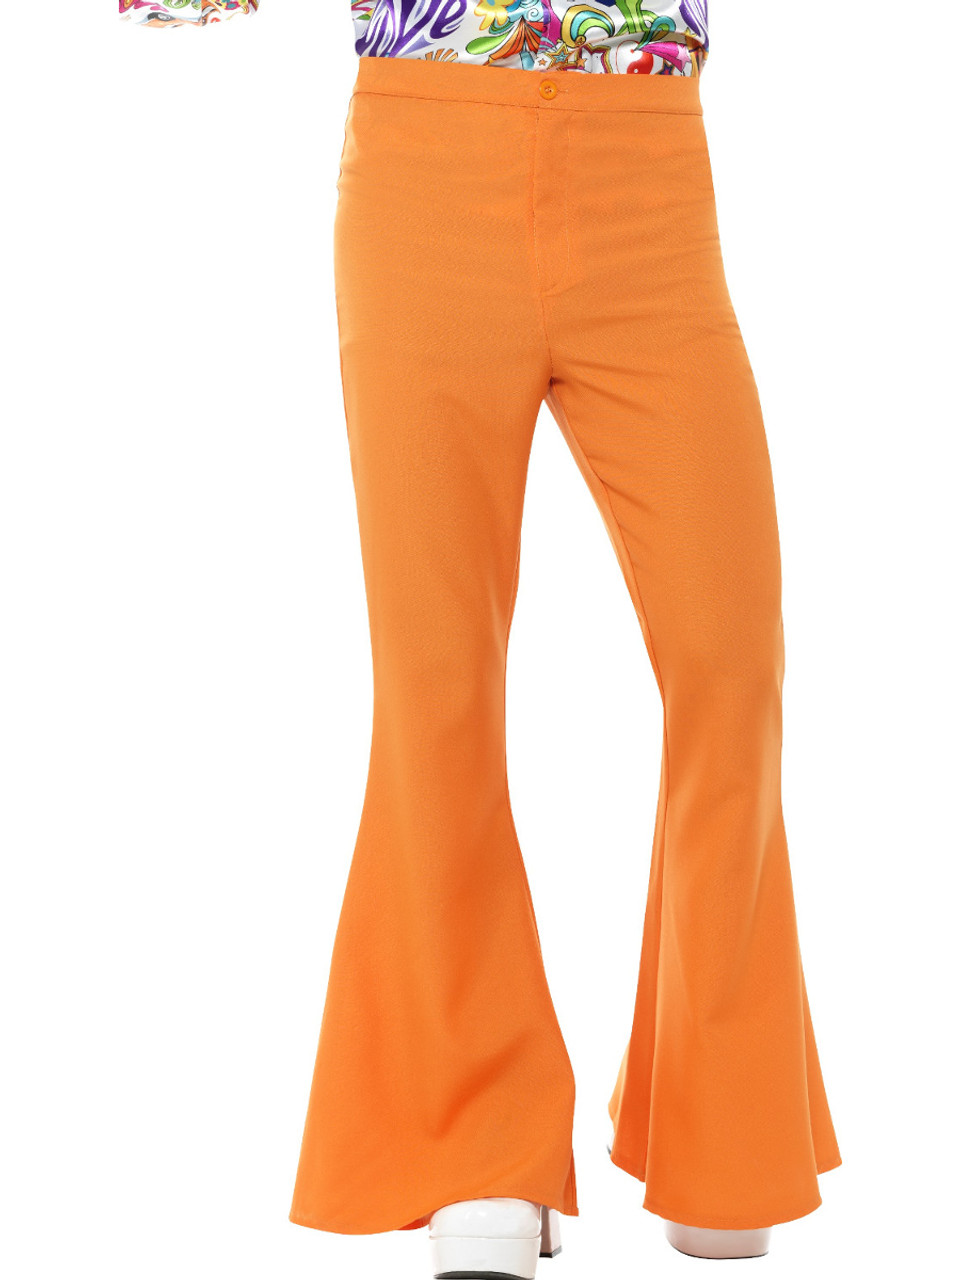 70s Orange Men's Flared Disco Pants